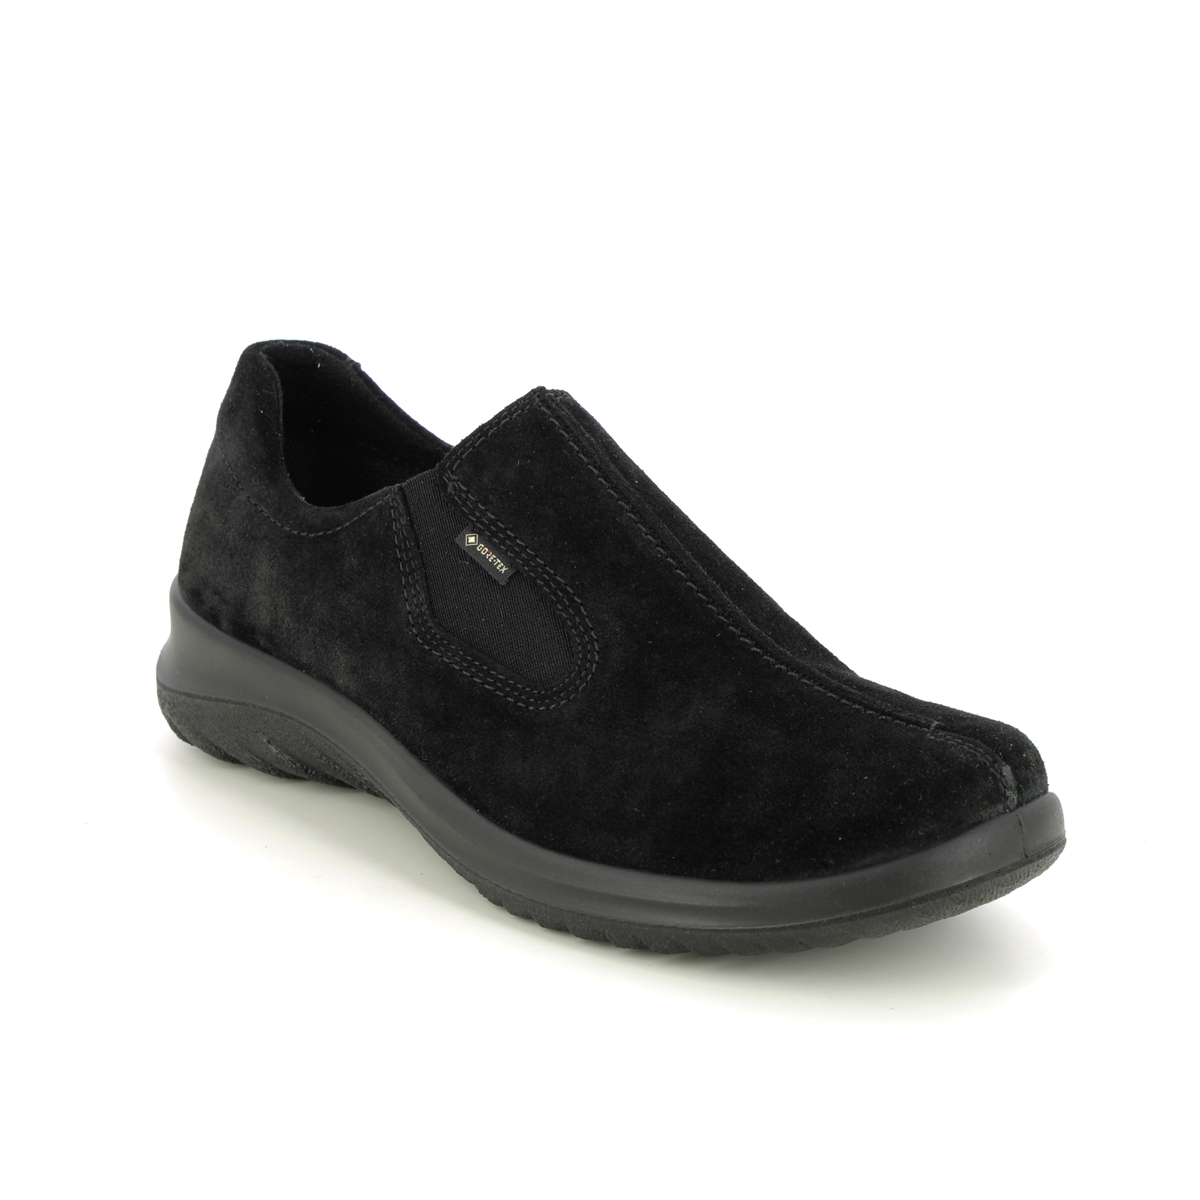 Legero Soft Shoe Gtx Black Suede Womens Comfort Slip On Shoes 2009568-0000 In Size 4 In Plain Black Suede